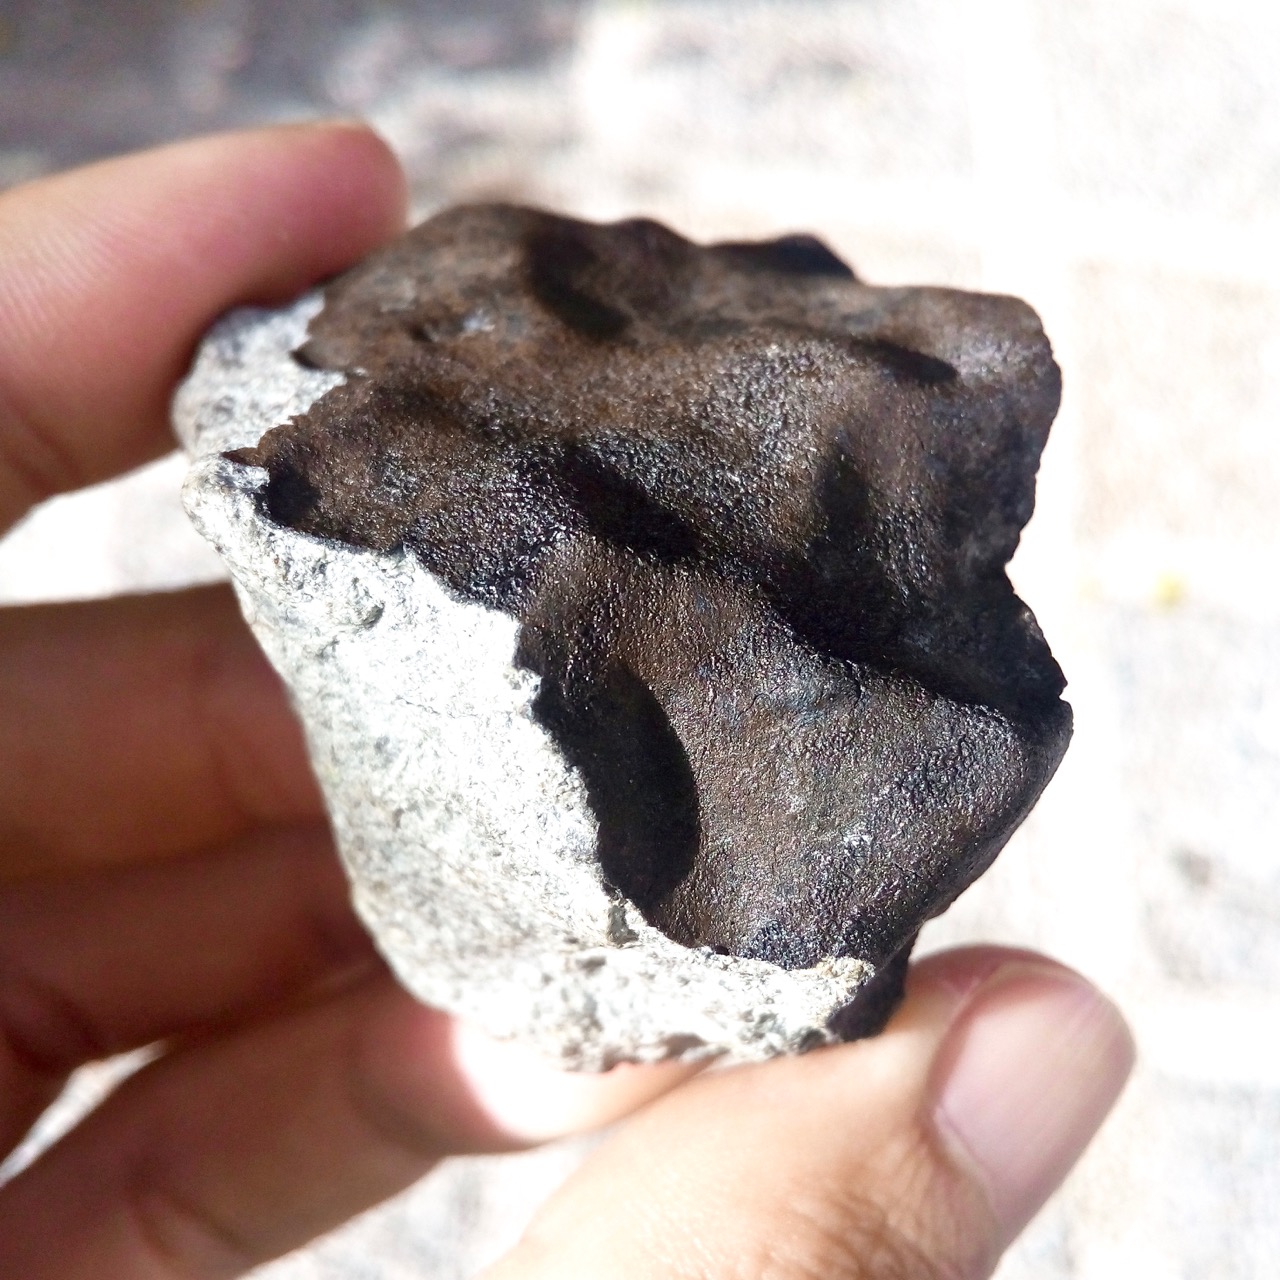 Kheneg Ljouad meteorite. LL5/6 chondrite.